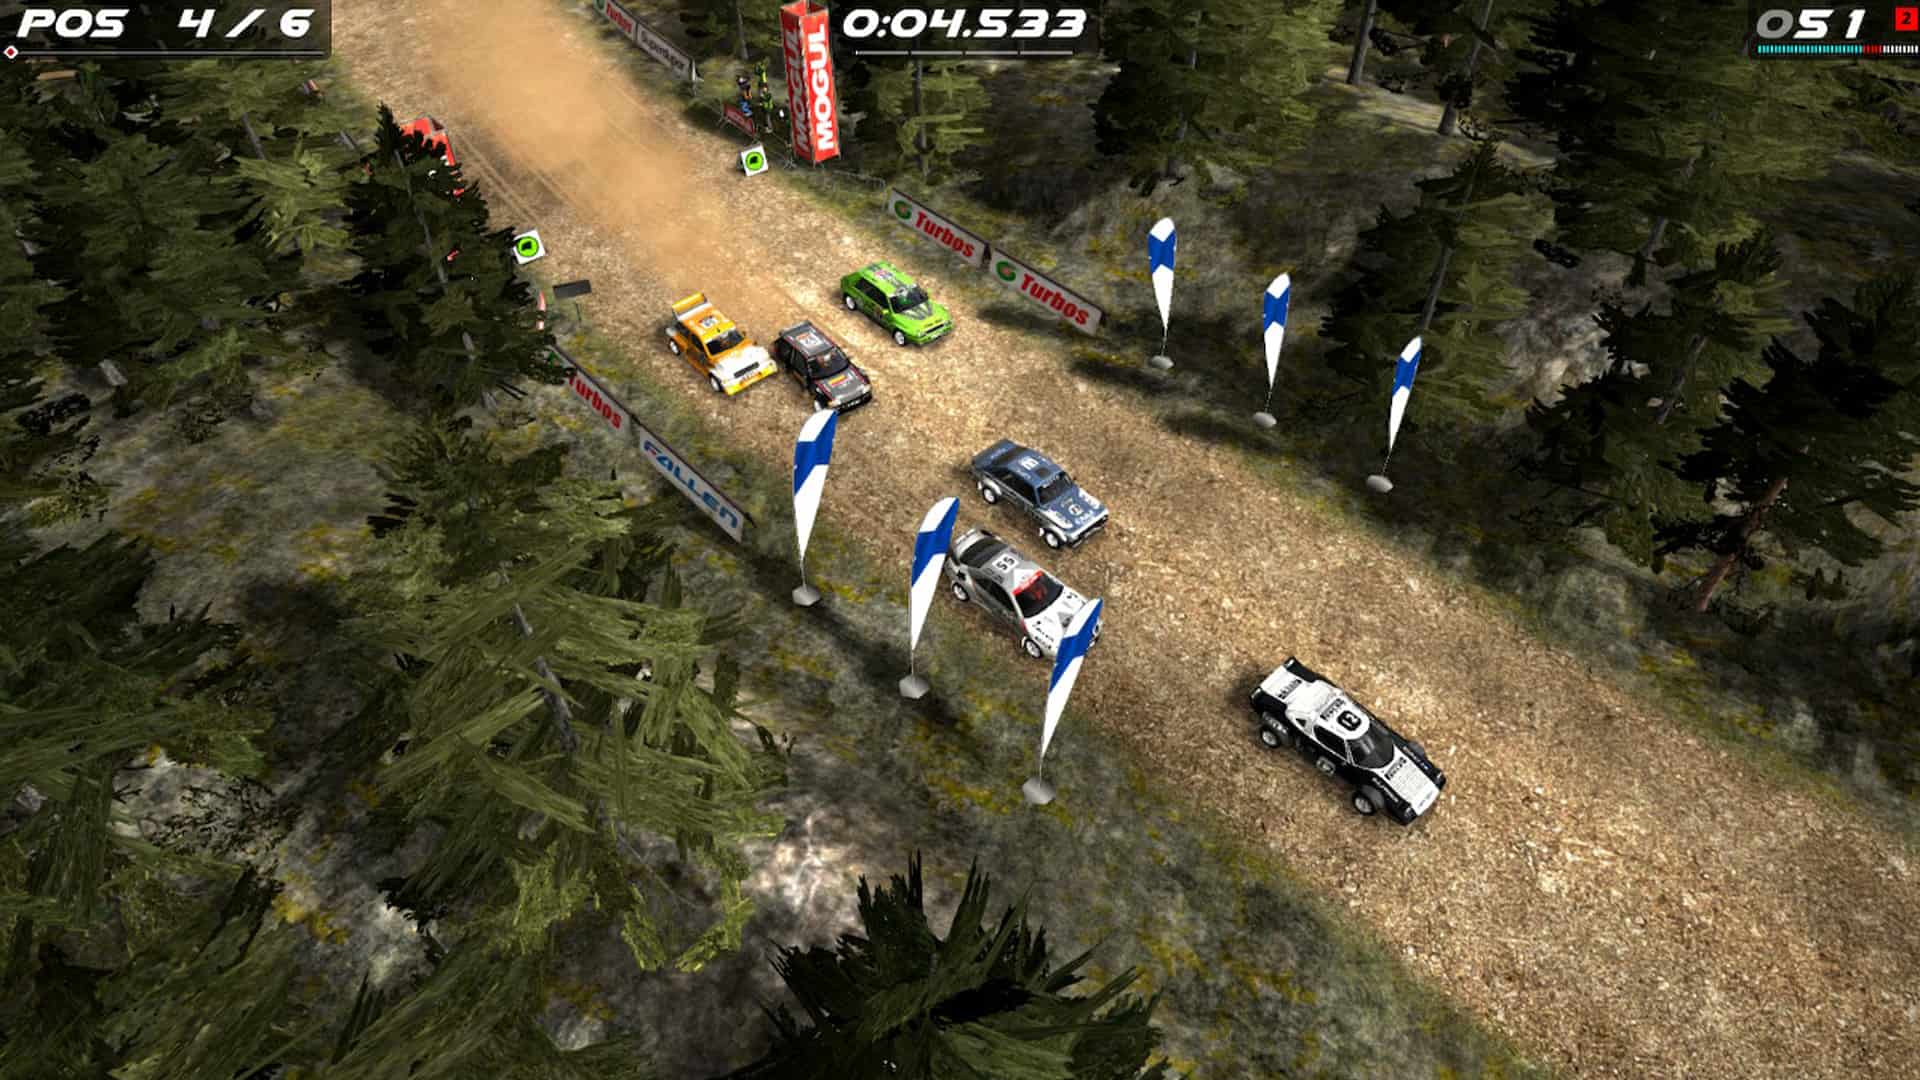 Car Rush Play Online Now - GameTop